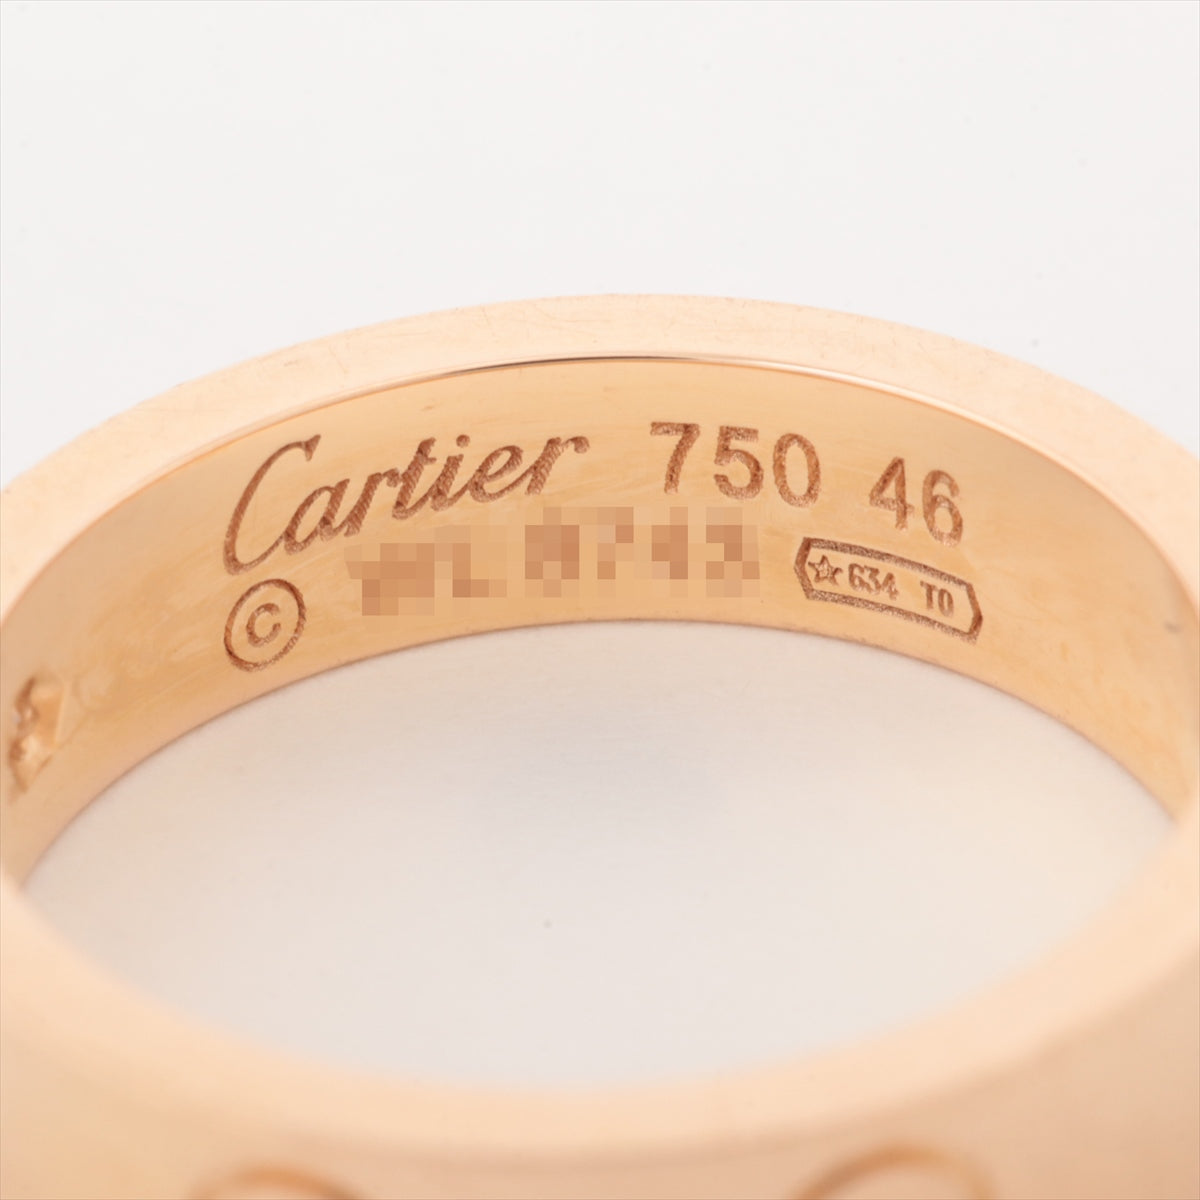 Cartier Minilab 1P Diamond Ring 750 (PG) 4.2g 46 CRB4050746